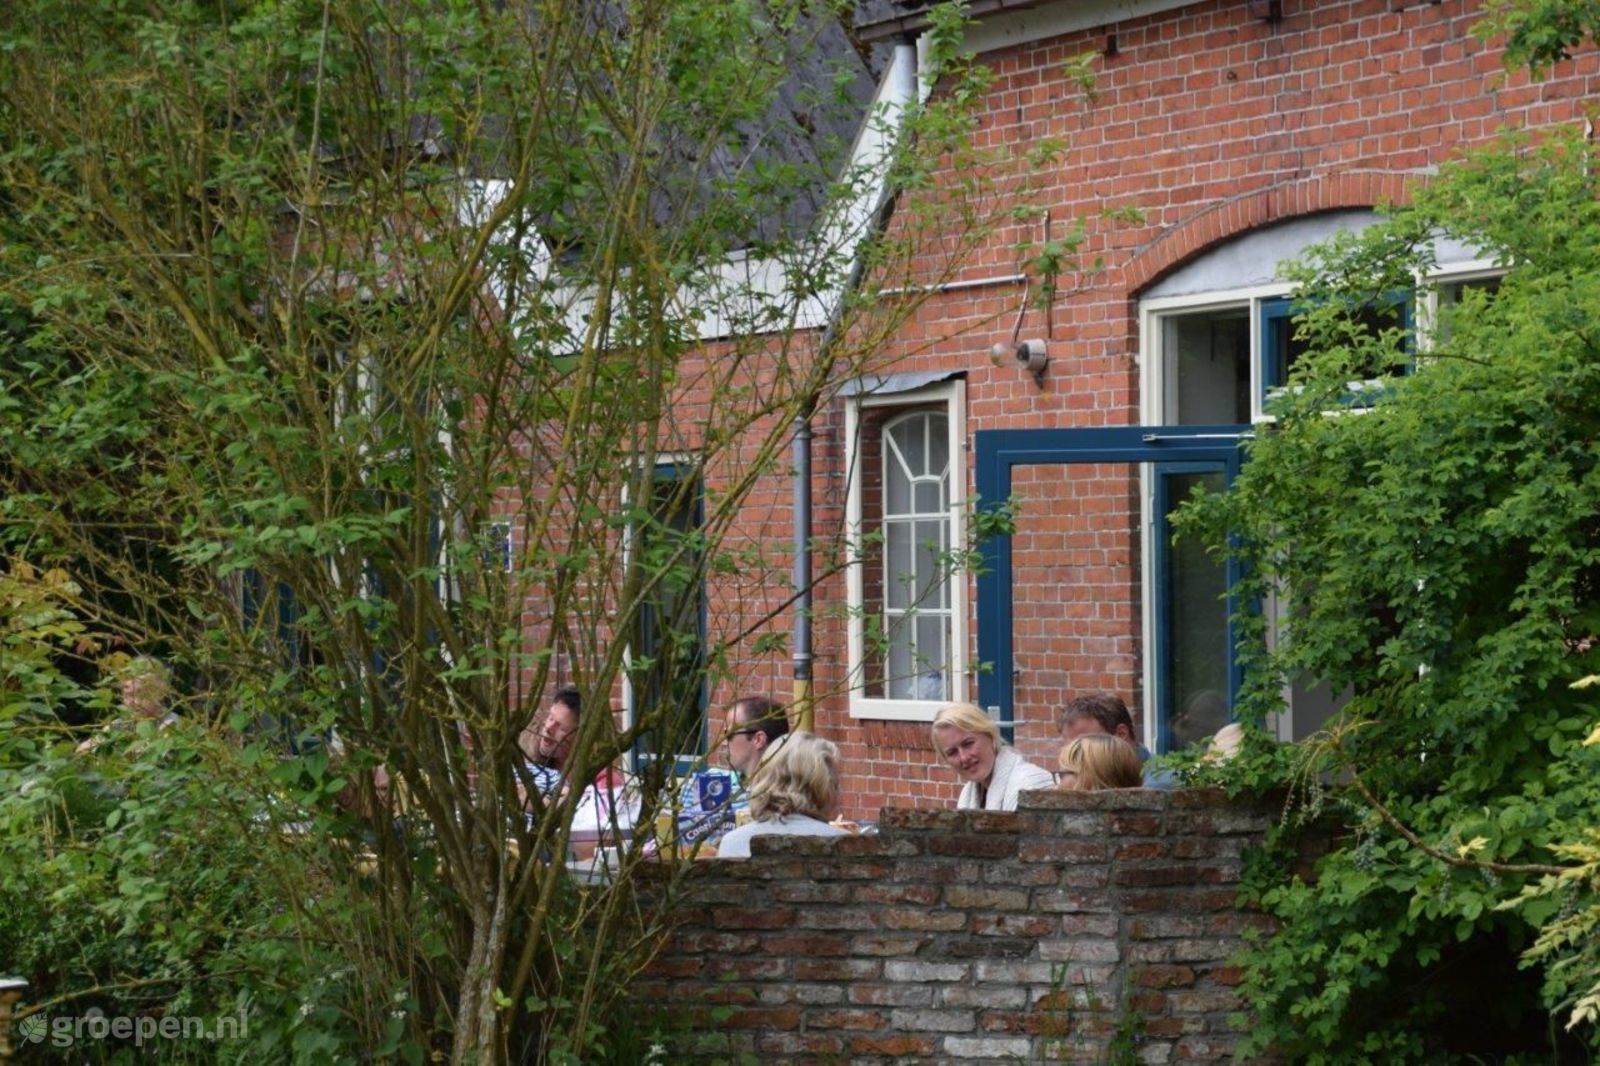 Group accommodation Vierhuizen